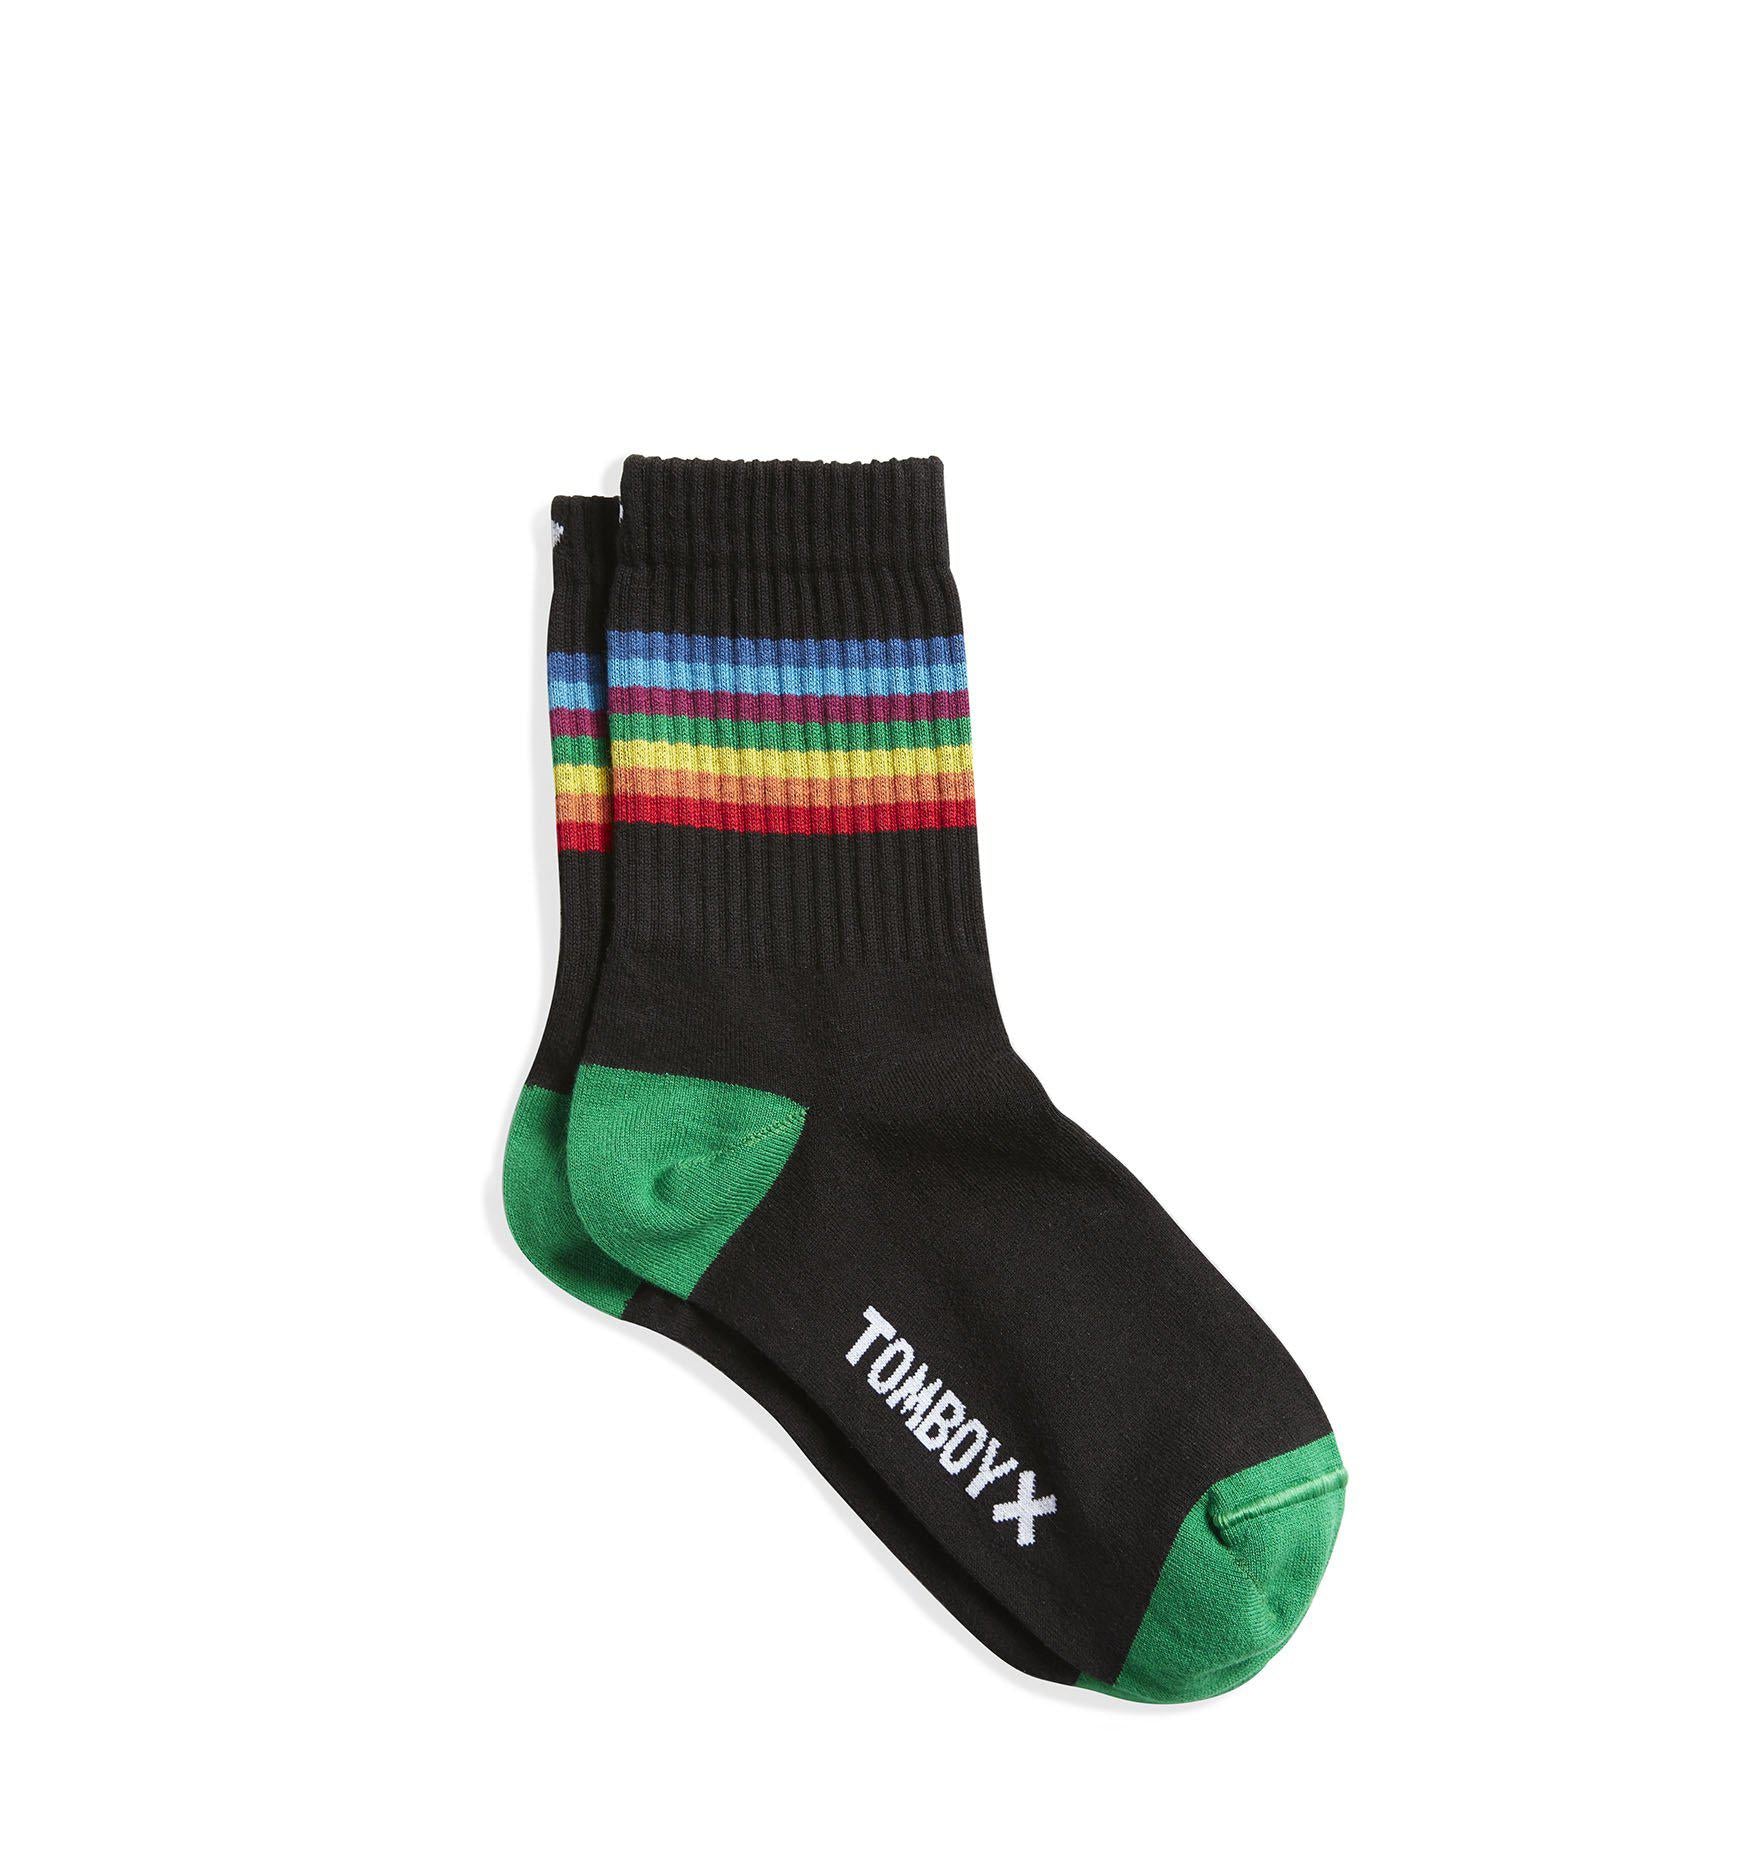 Anklet Crew Socks - Black with Rainbow